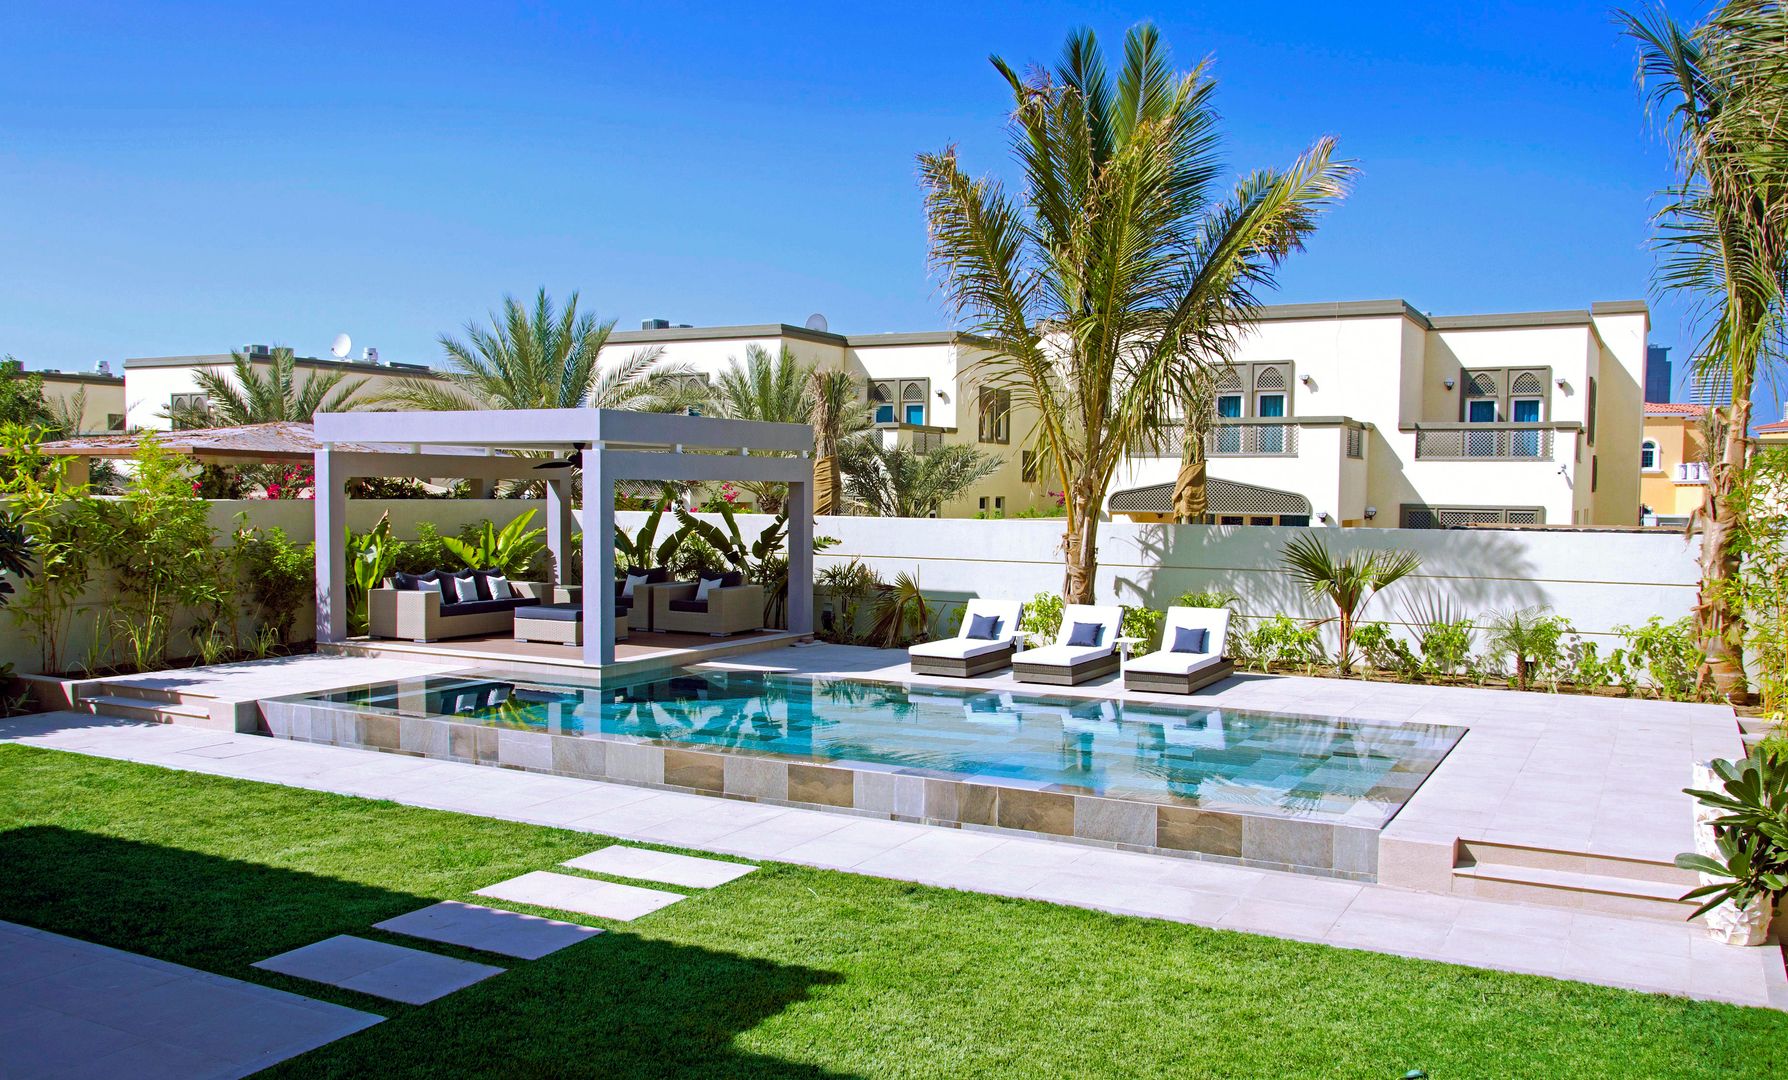 Infinity pool in Italian porcelain tiles Xterior Landscaping and Pools Piscinas de estilo moderno swimming pool Dubai,landscape,design